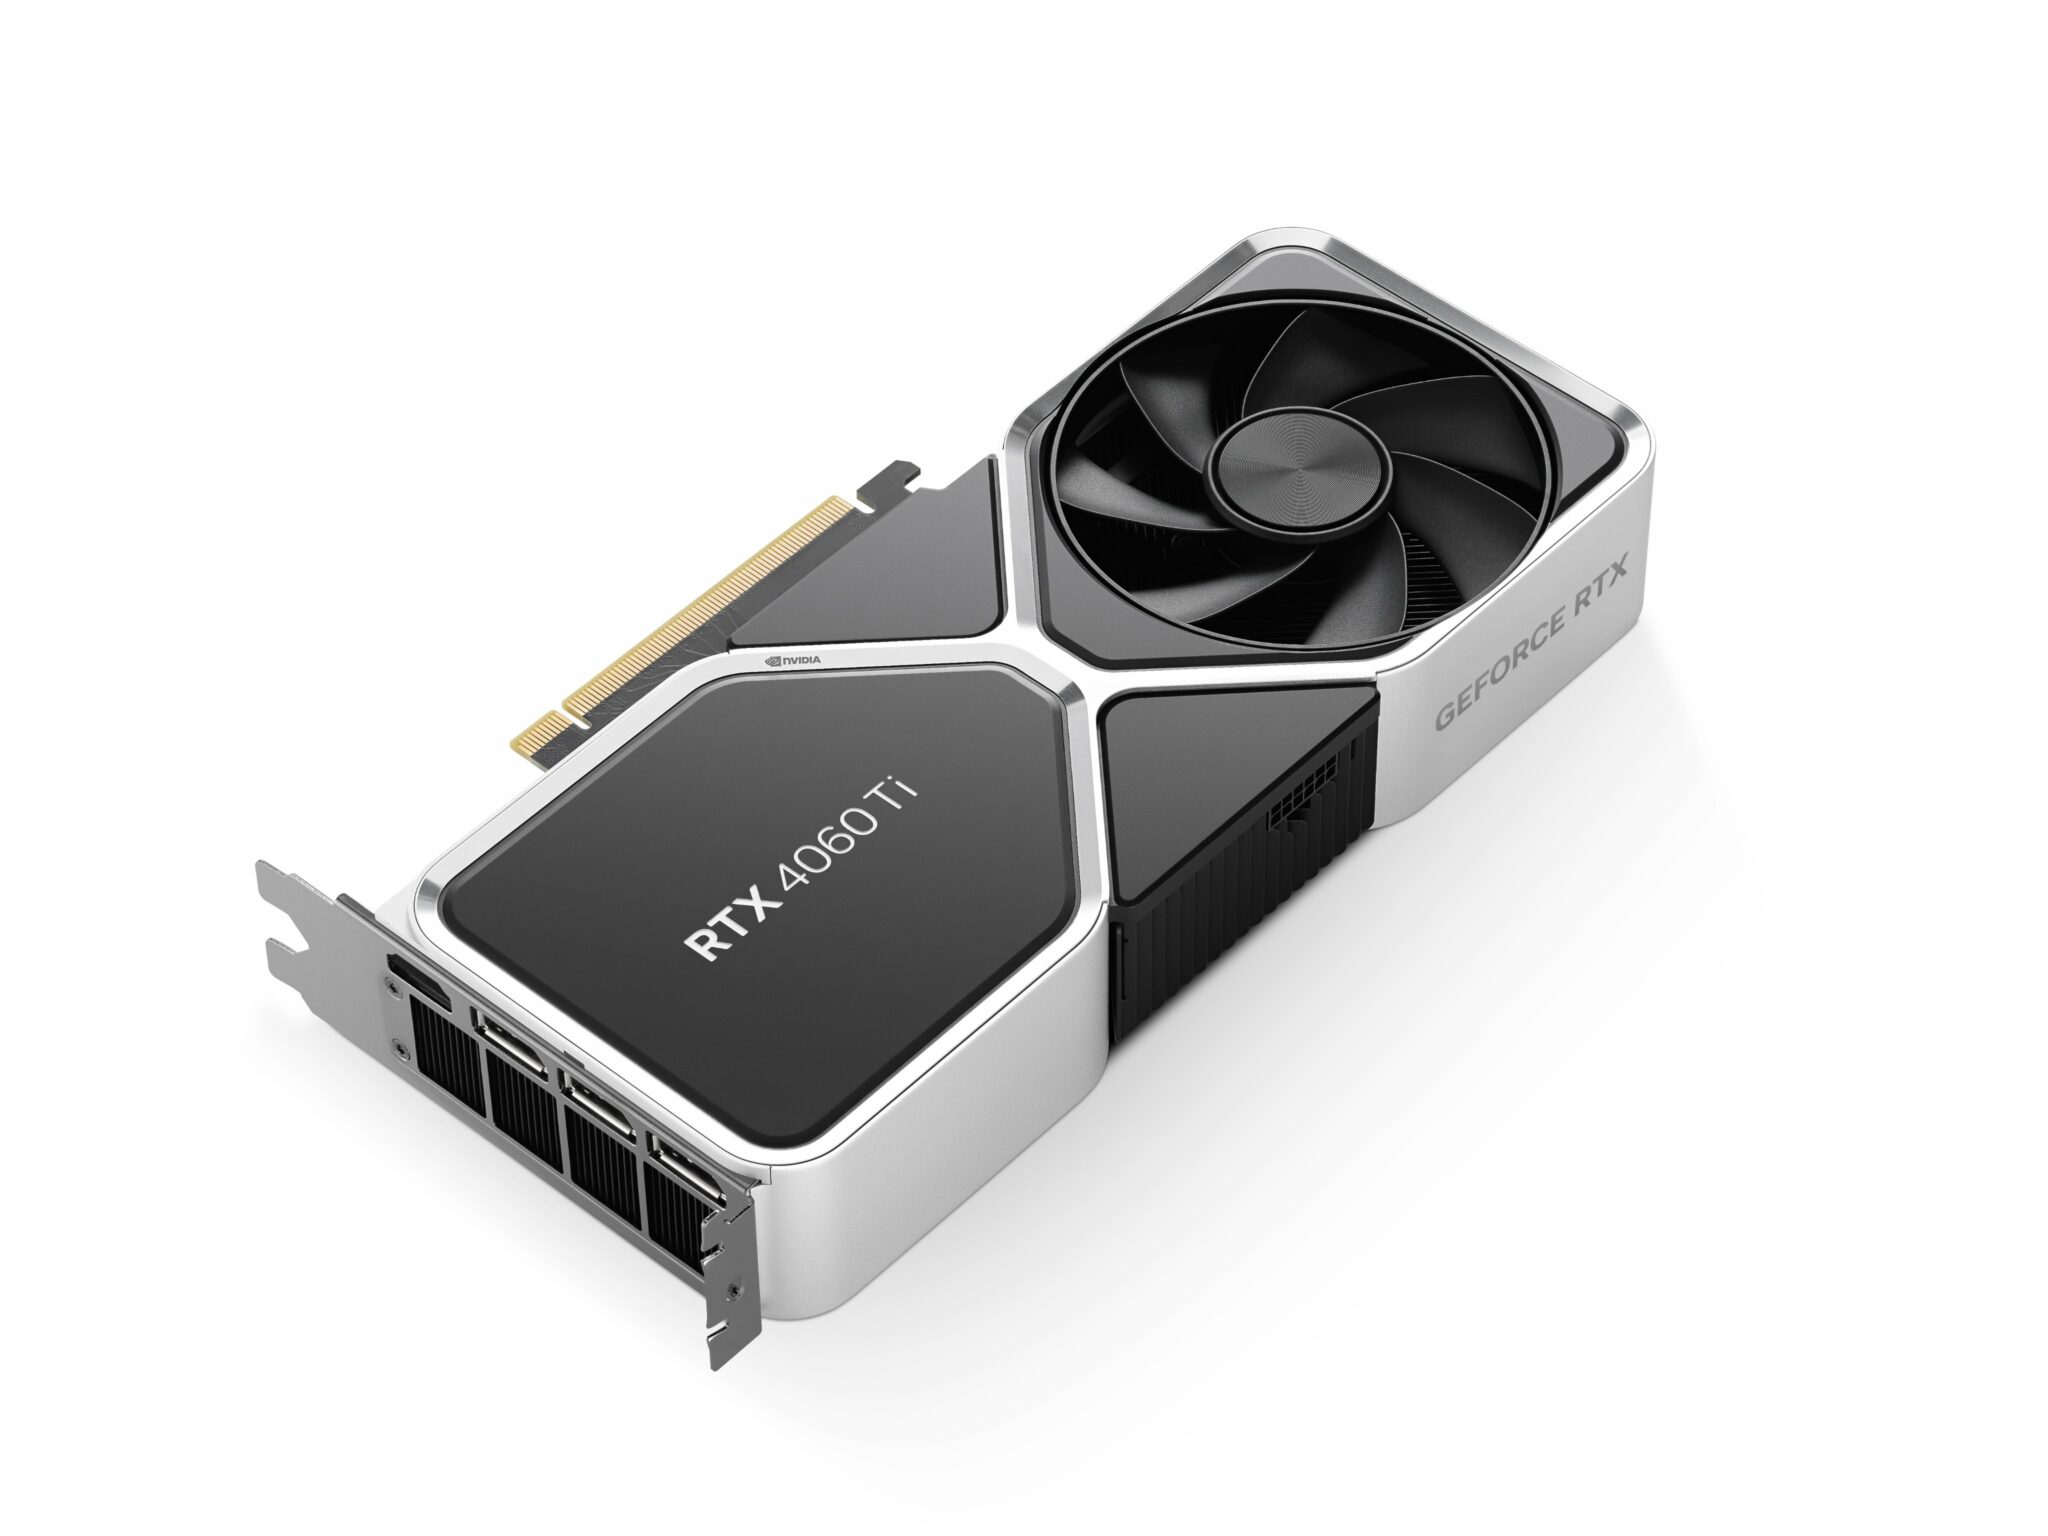 Nvidia RTX 3060 Vs RTX 3060 Ti: Which Should You Buy?